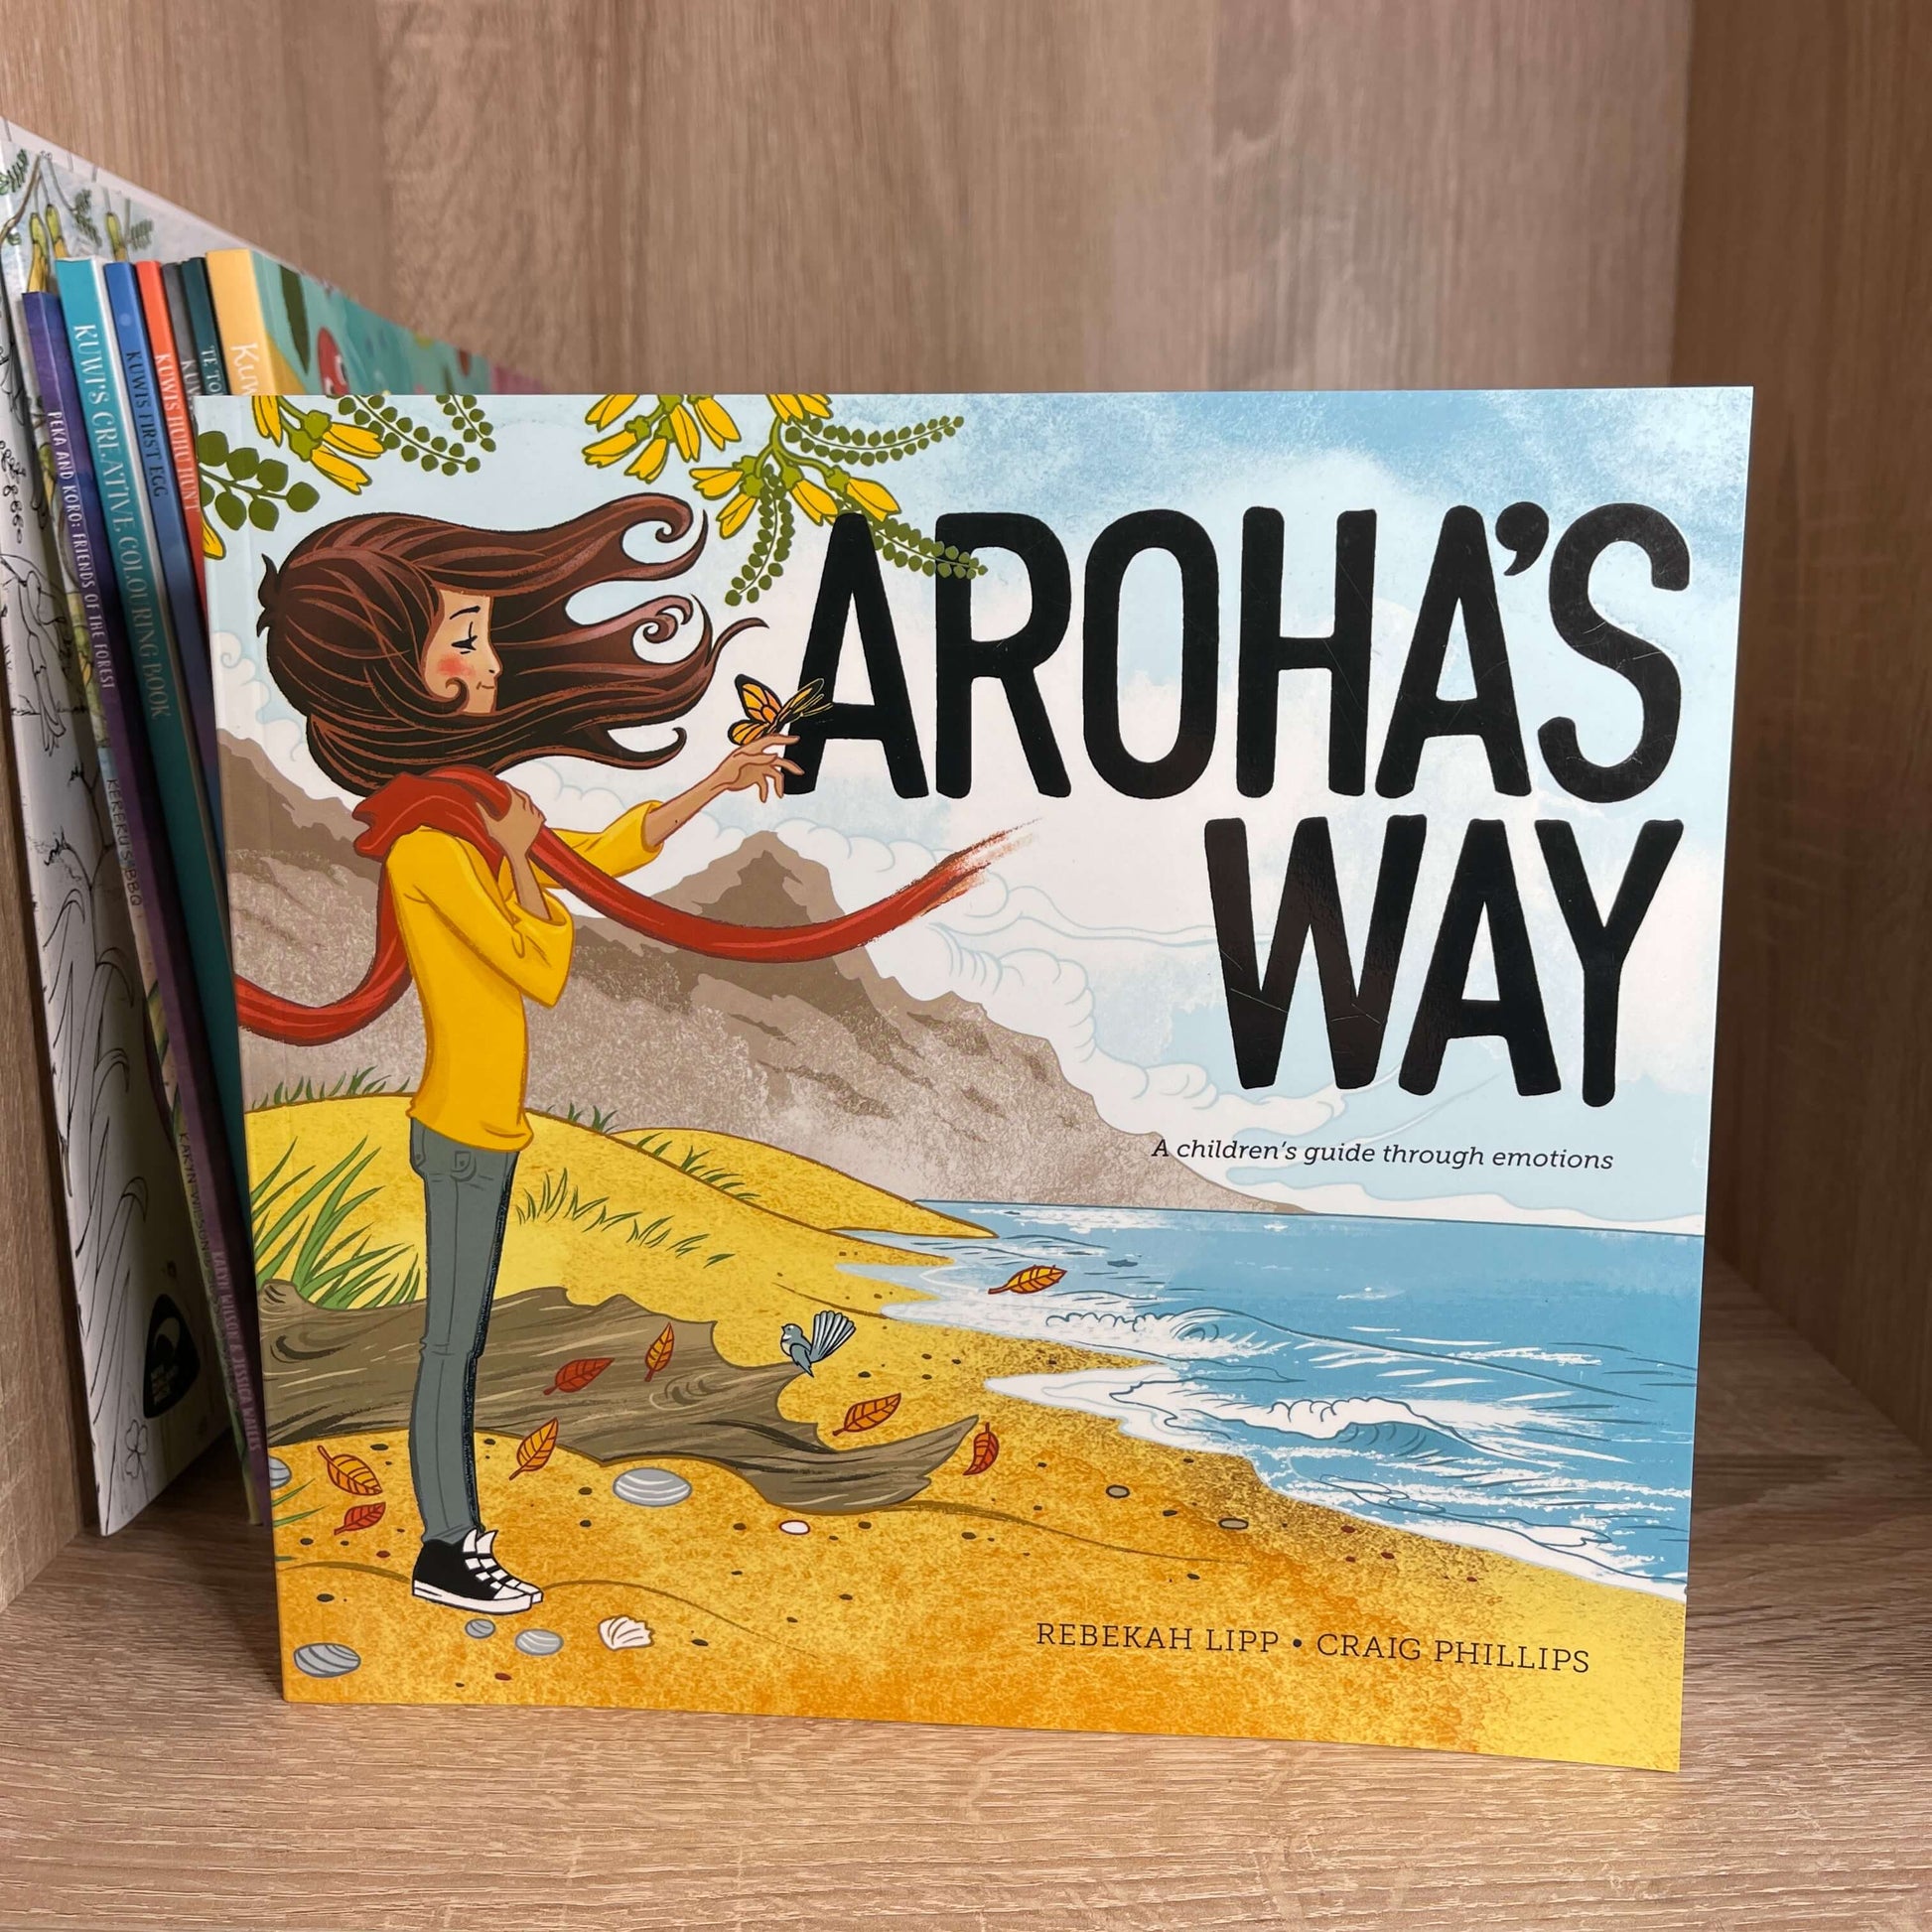 New Zealand based kids book, Aroha's way.